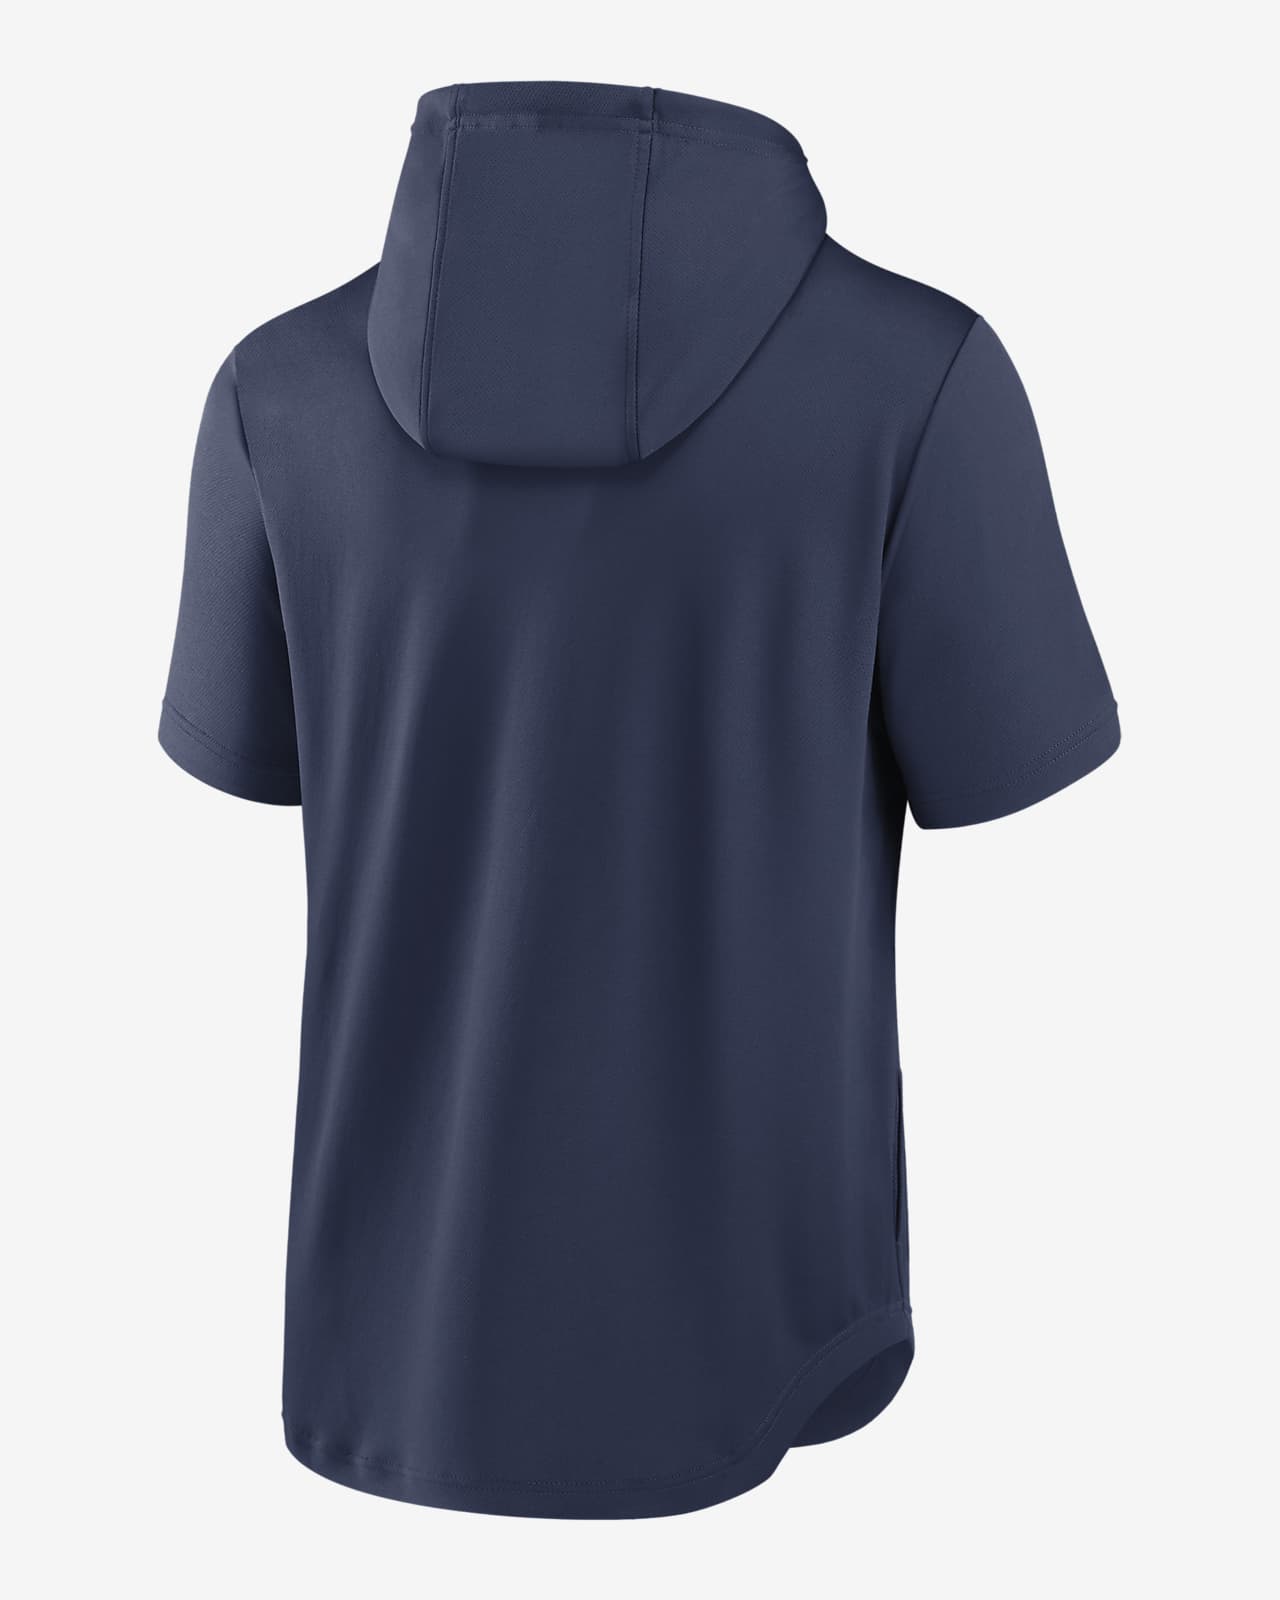 Houston Astros Shirt - Colorful Baseball Unisex Hoodie Short Sleeve